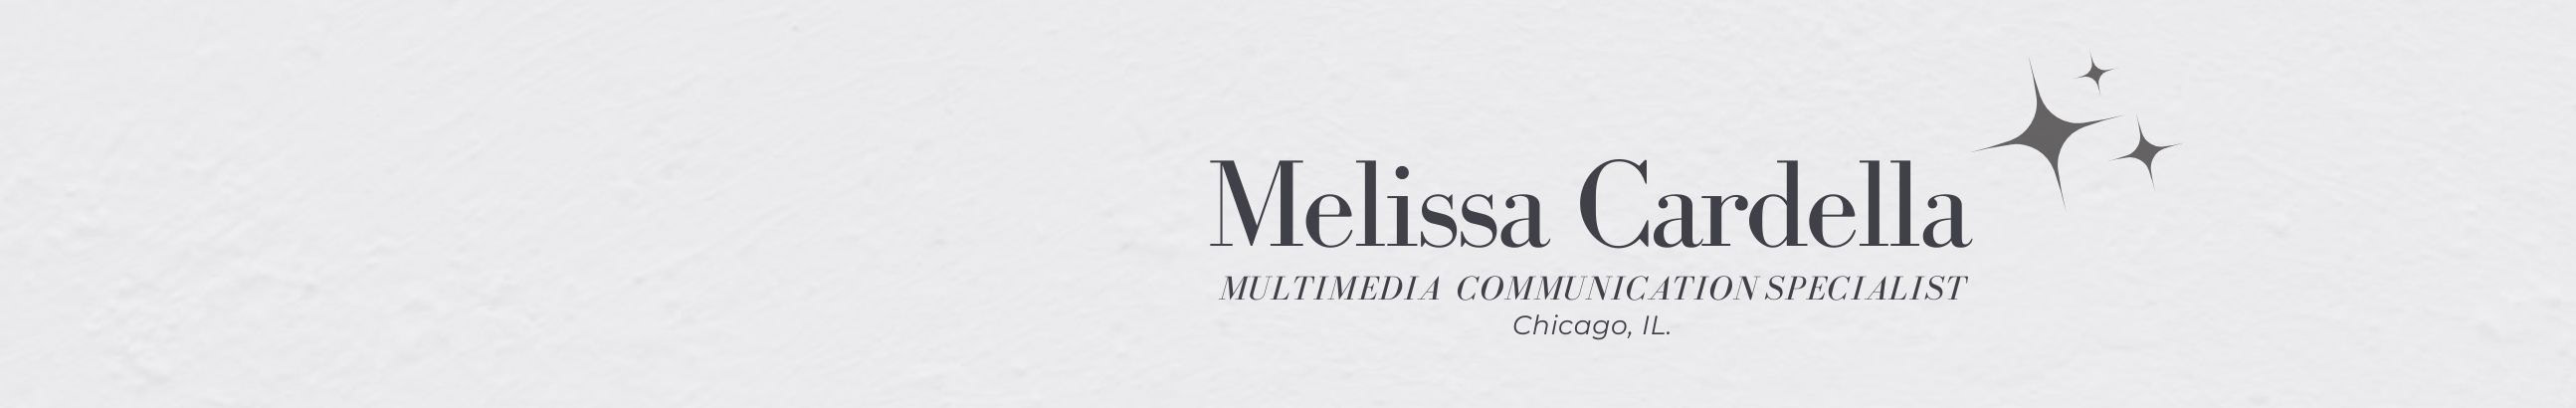 Melissa Cardellas profilbanner